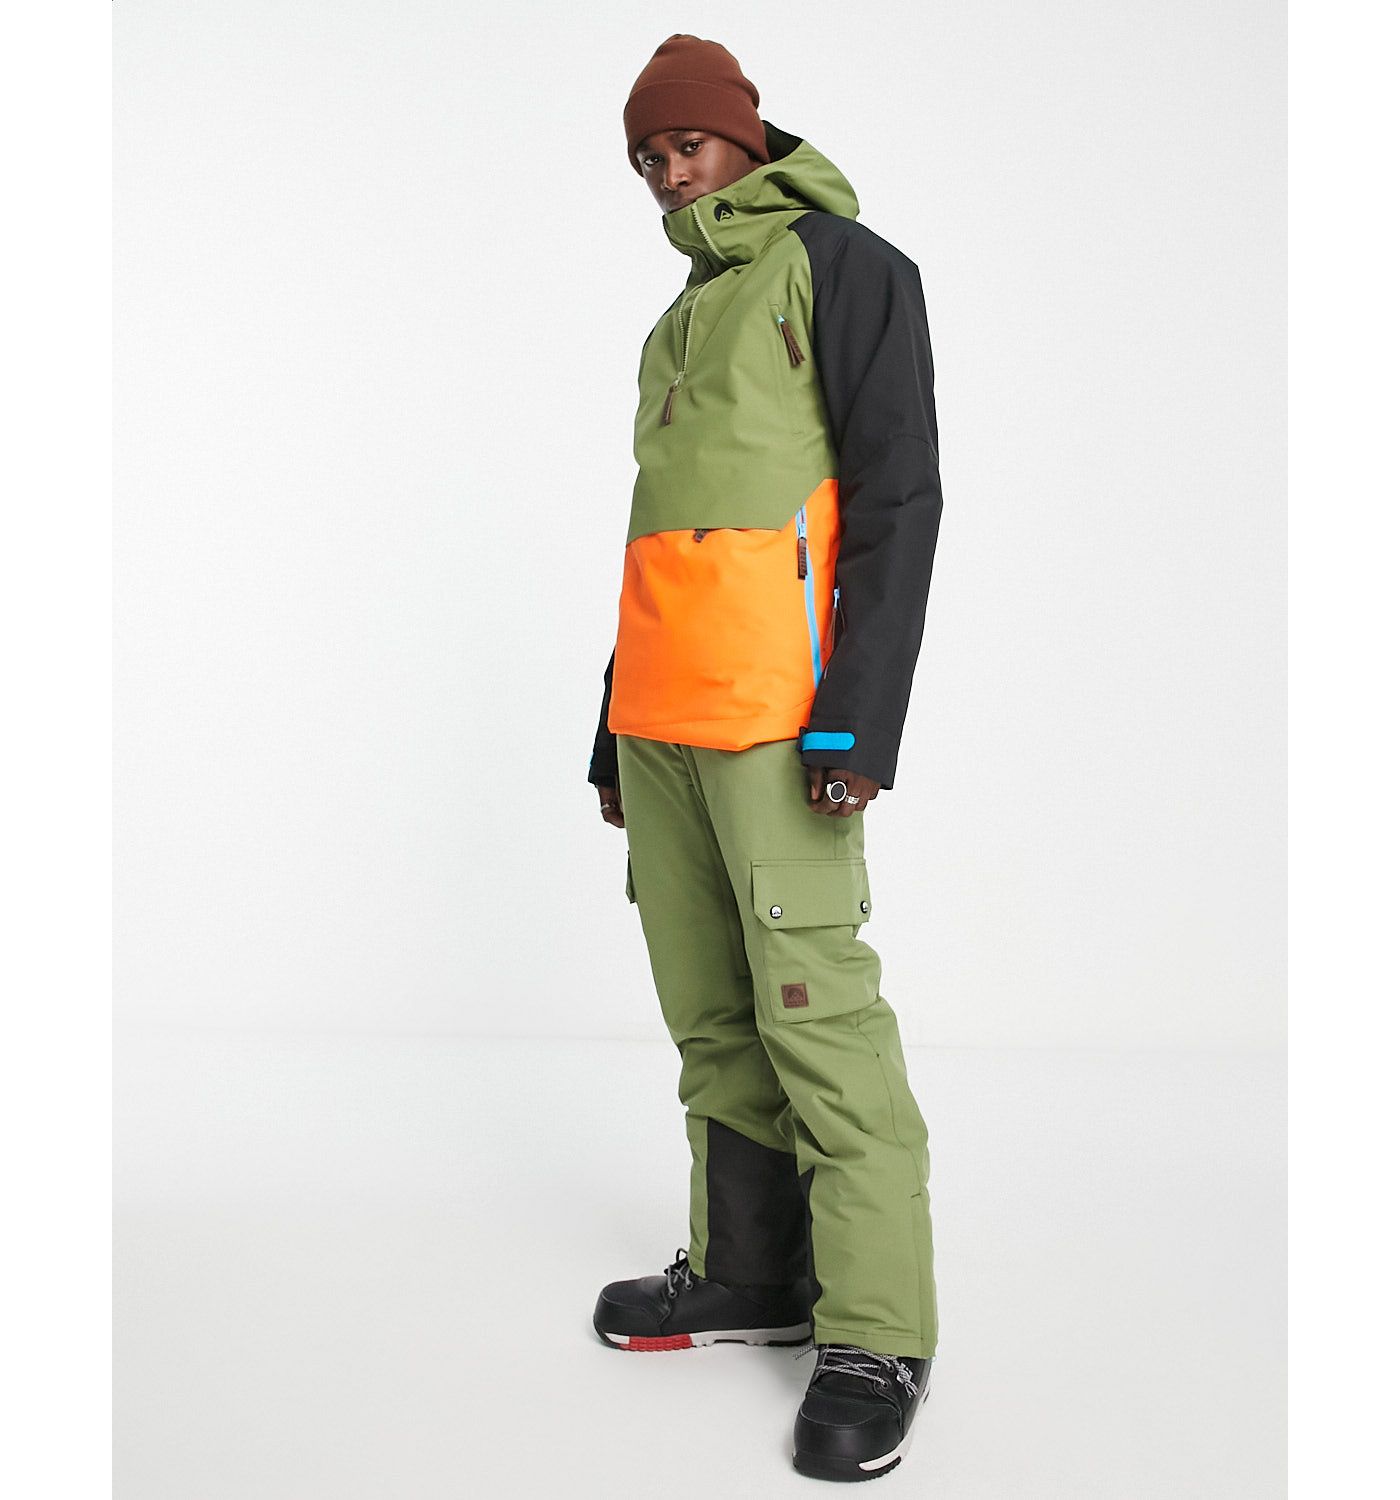 OOSC overhead ski jacket in khaki orange 